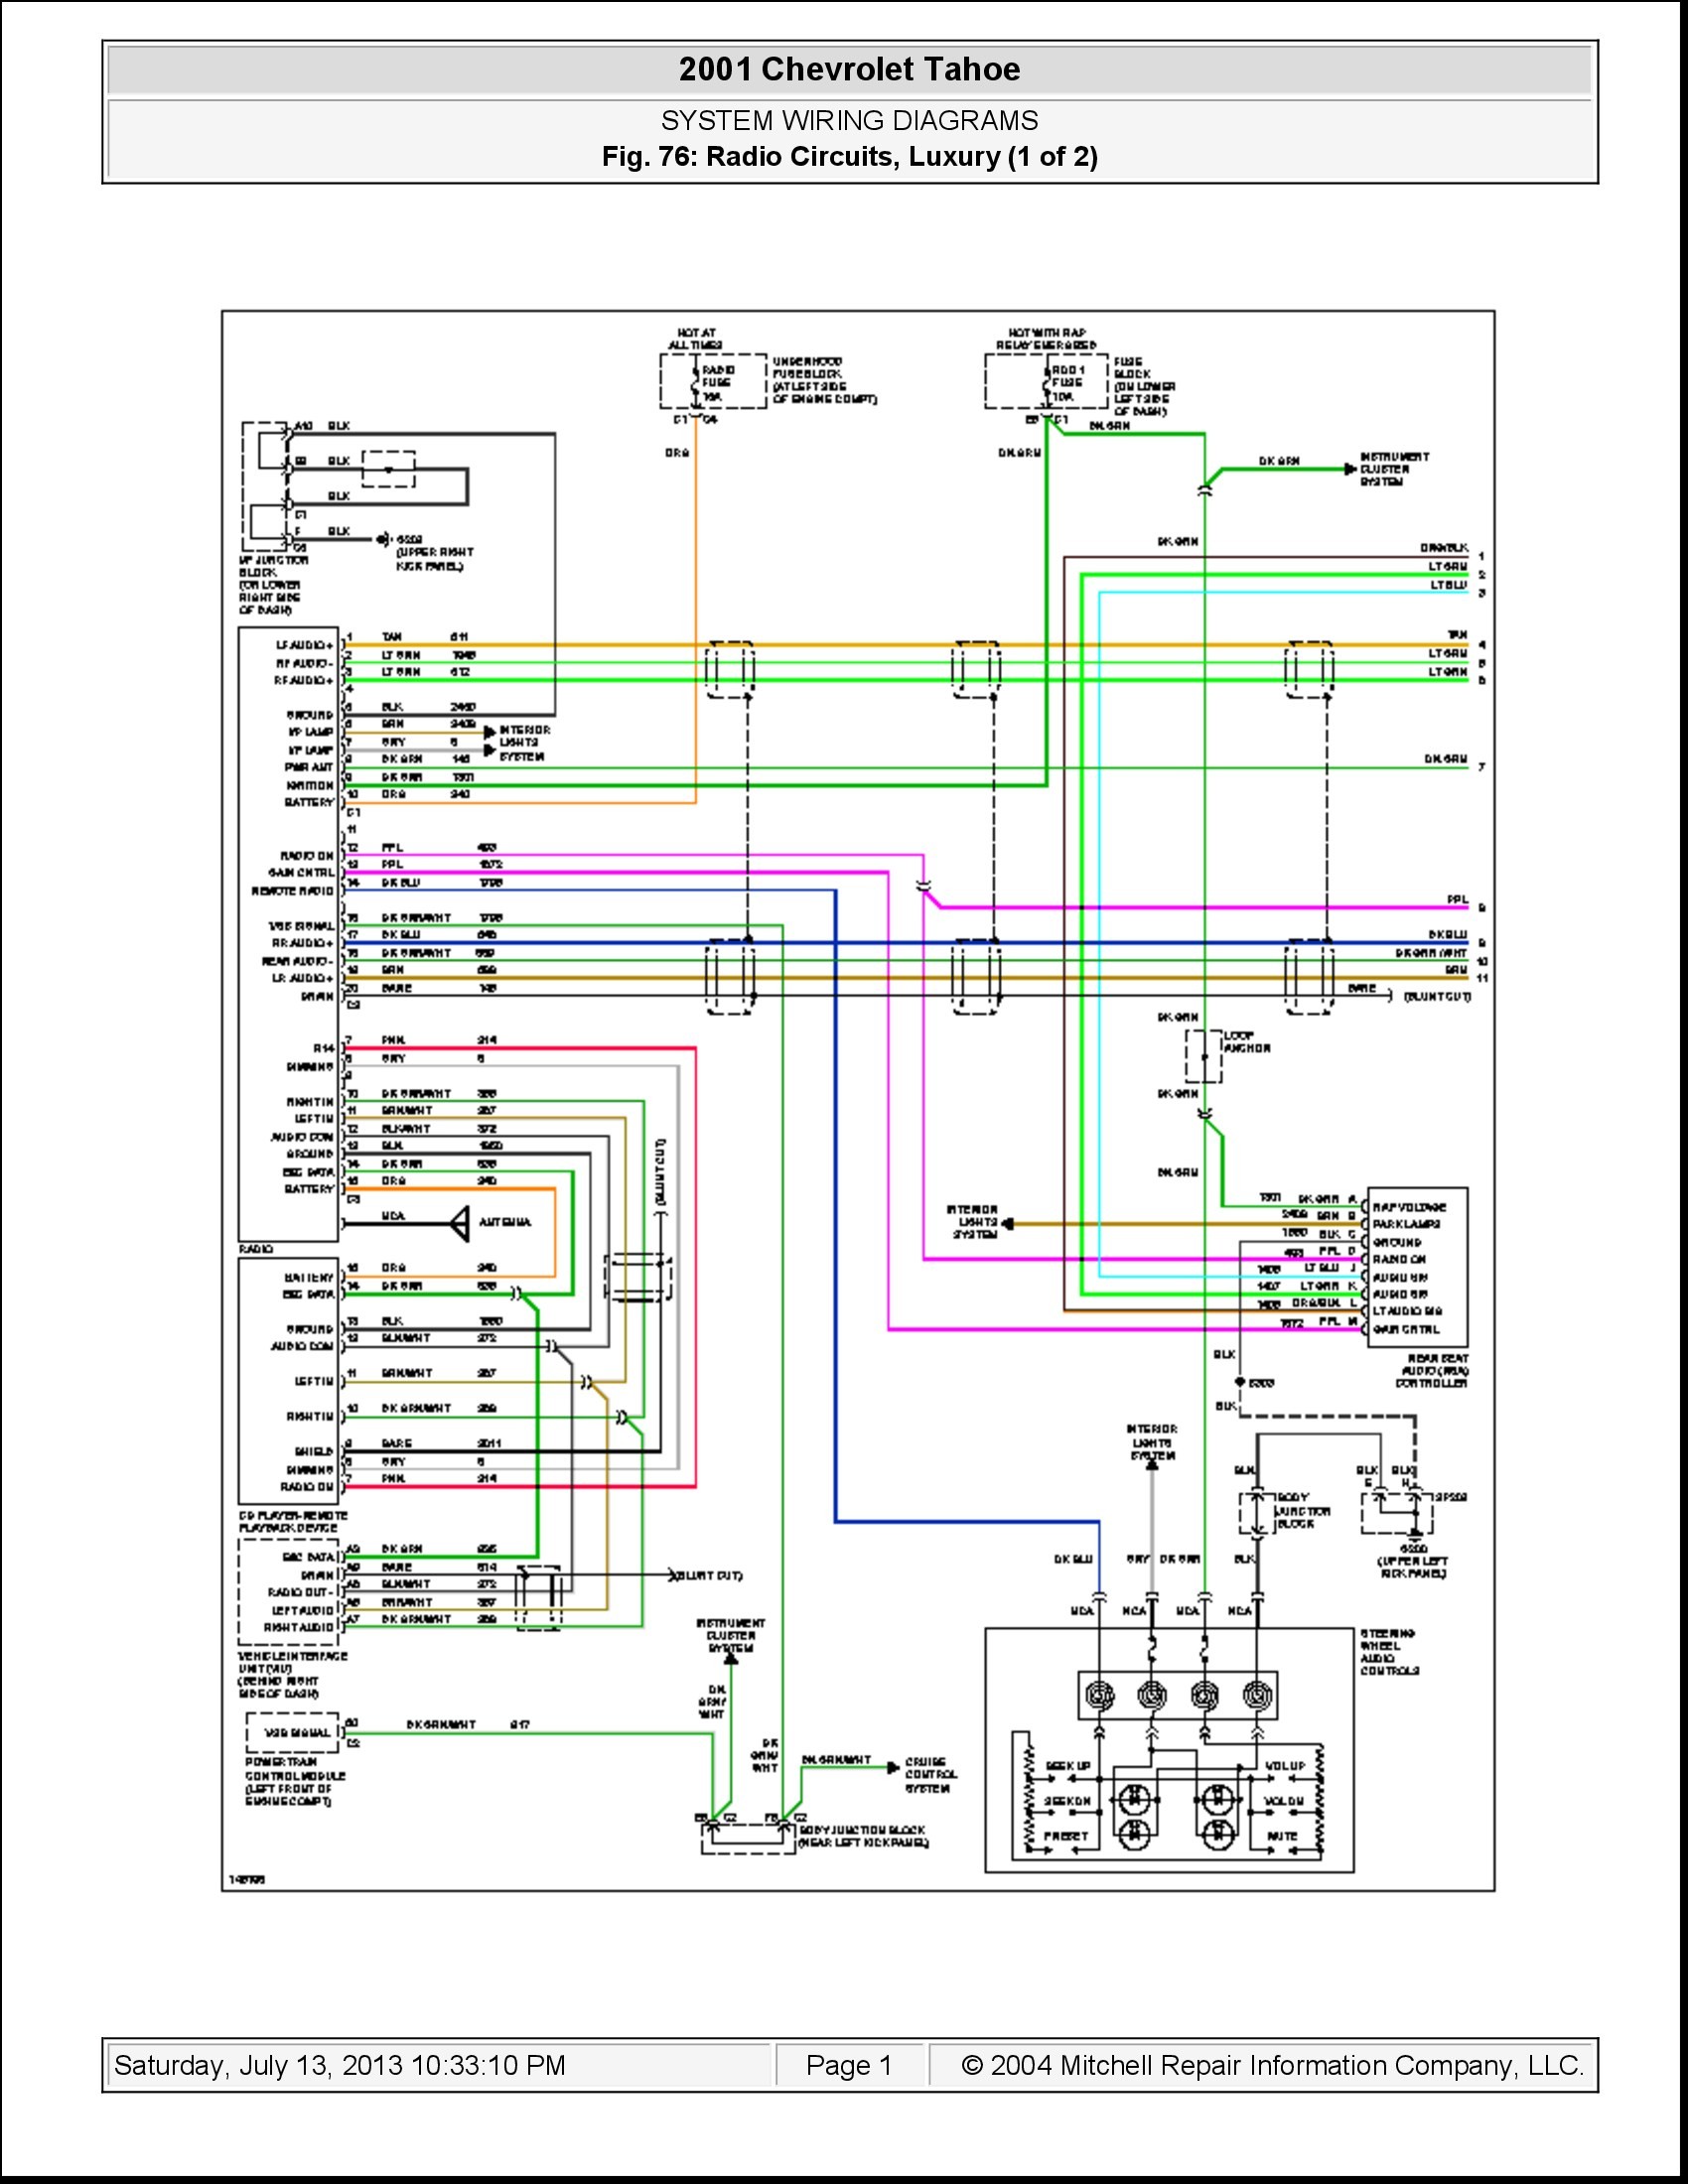 2007 Chevrolet Trailblazer Factory Radio Wiring Diagram from mainetreasurechest.com